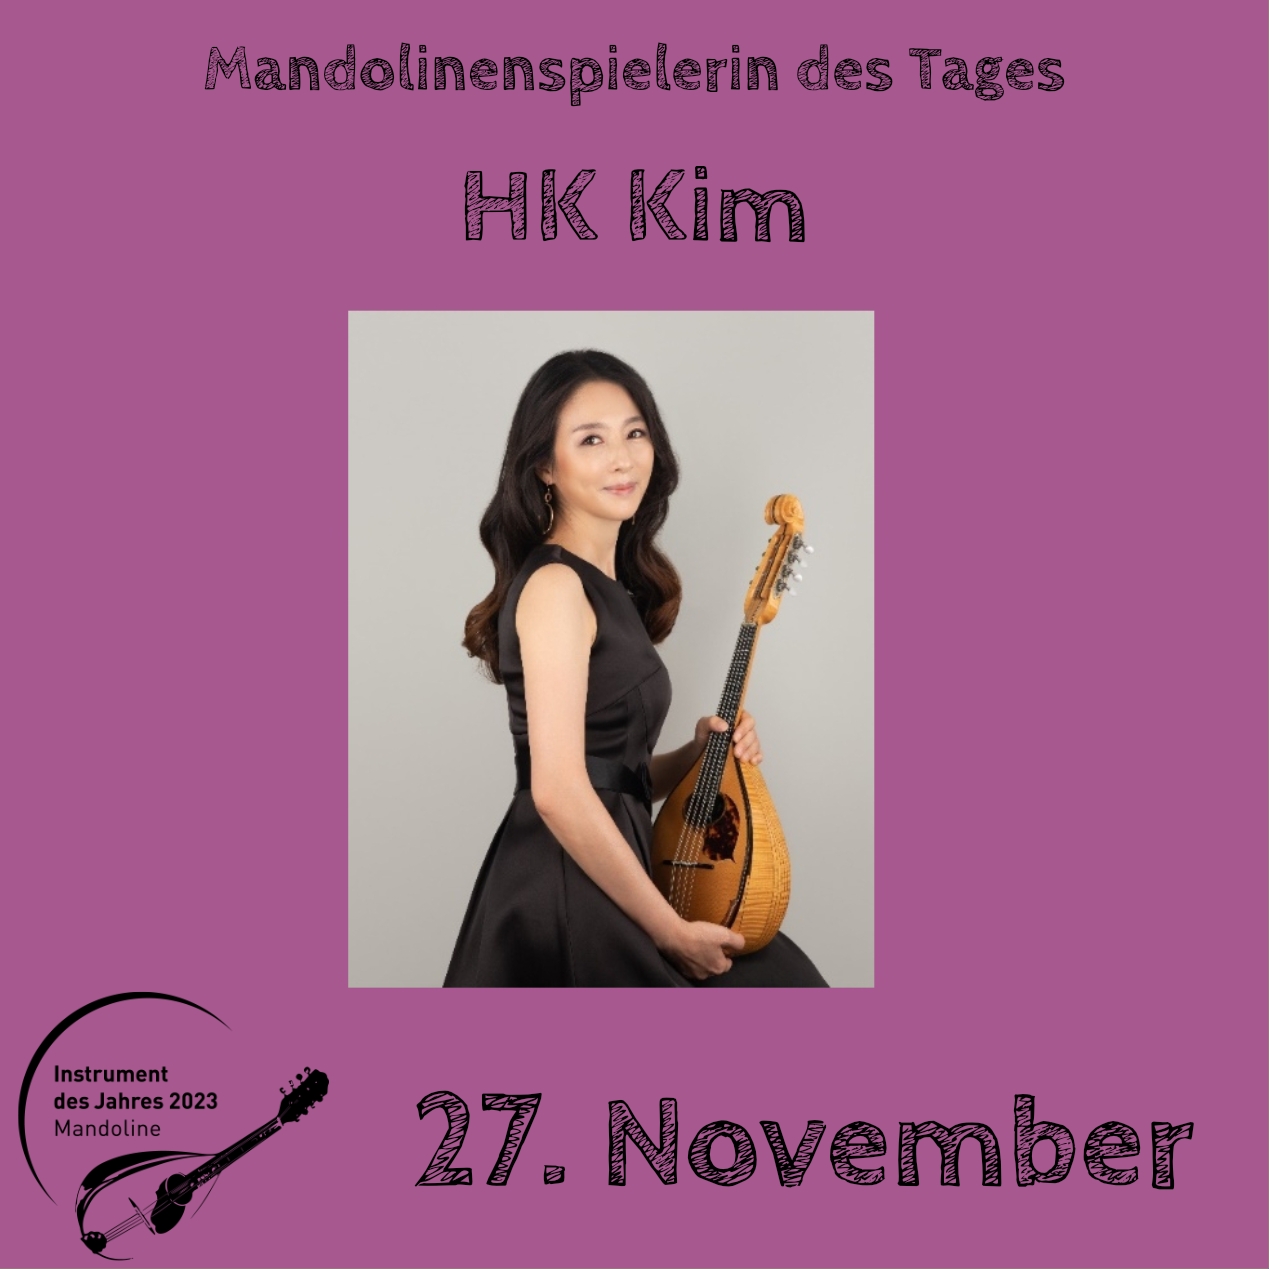 27. November - HK Kim Instrument des Jahres 2023 Mandolinenspieler Mandolinenspielerin des Tages